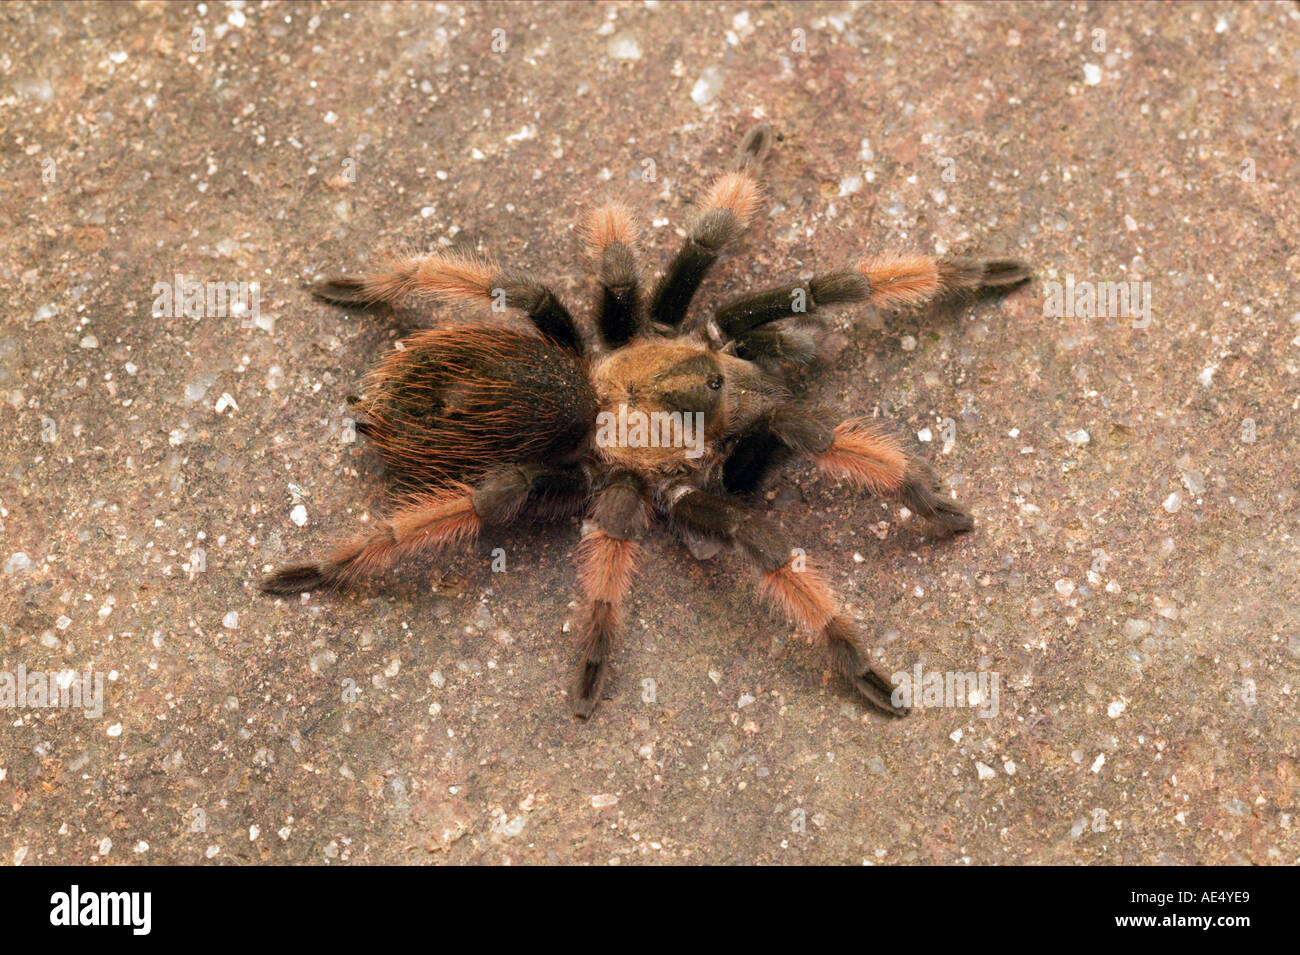 Mexikanische Redleg, Red-legged Tarantula. (Brachypelma Emilia). Spinne auf  einem Felsen Stockfotografie - Alamy